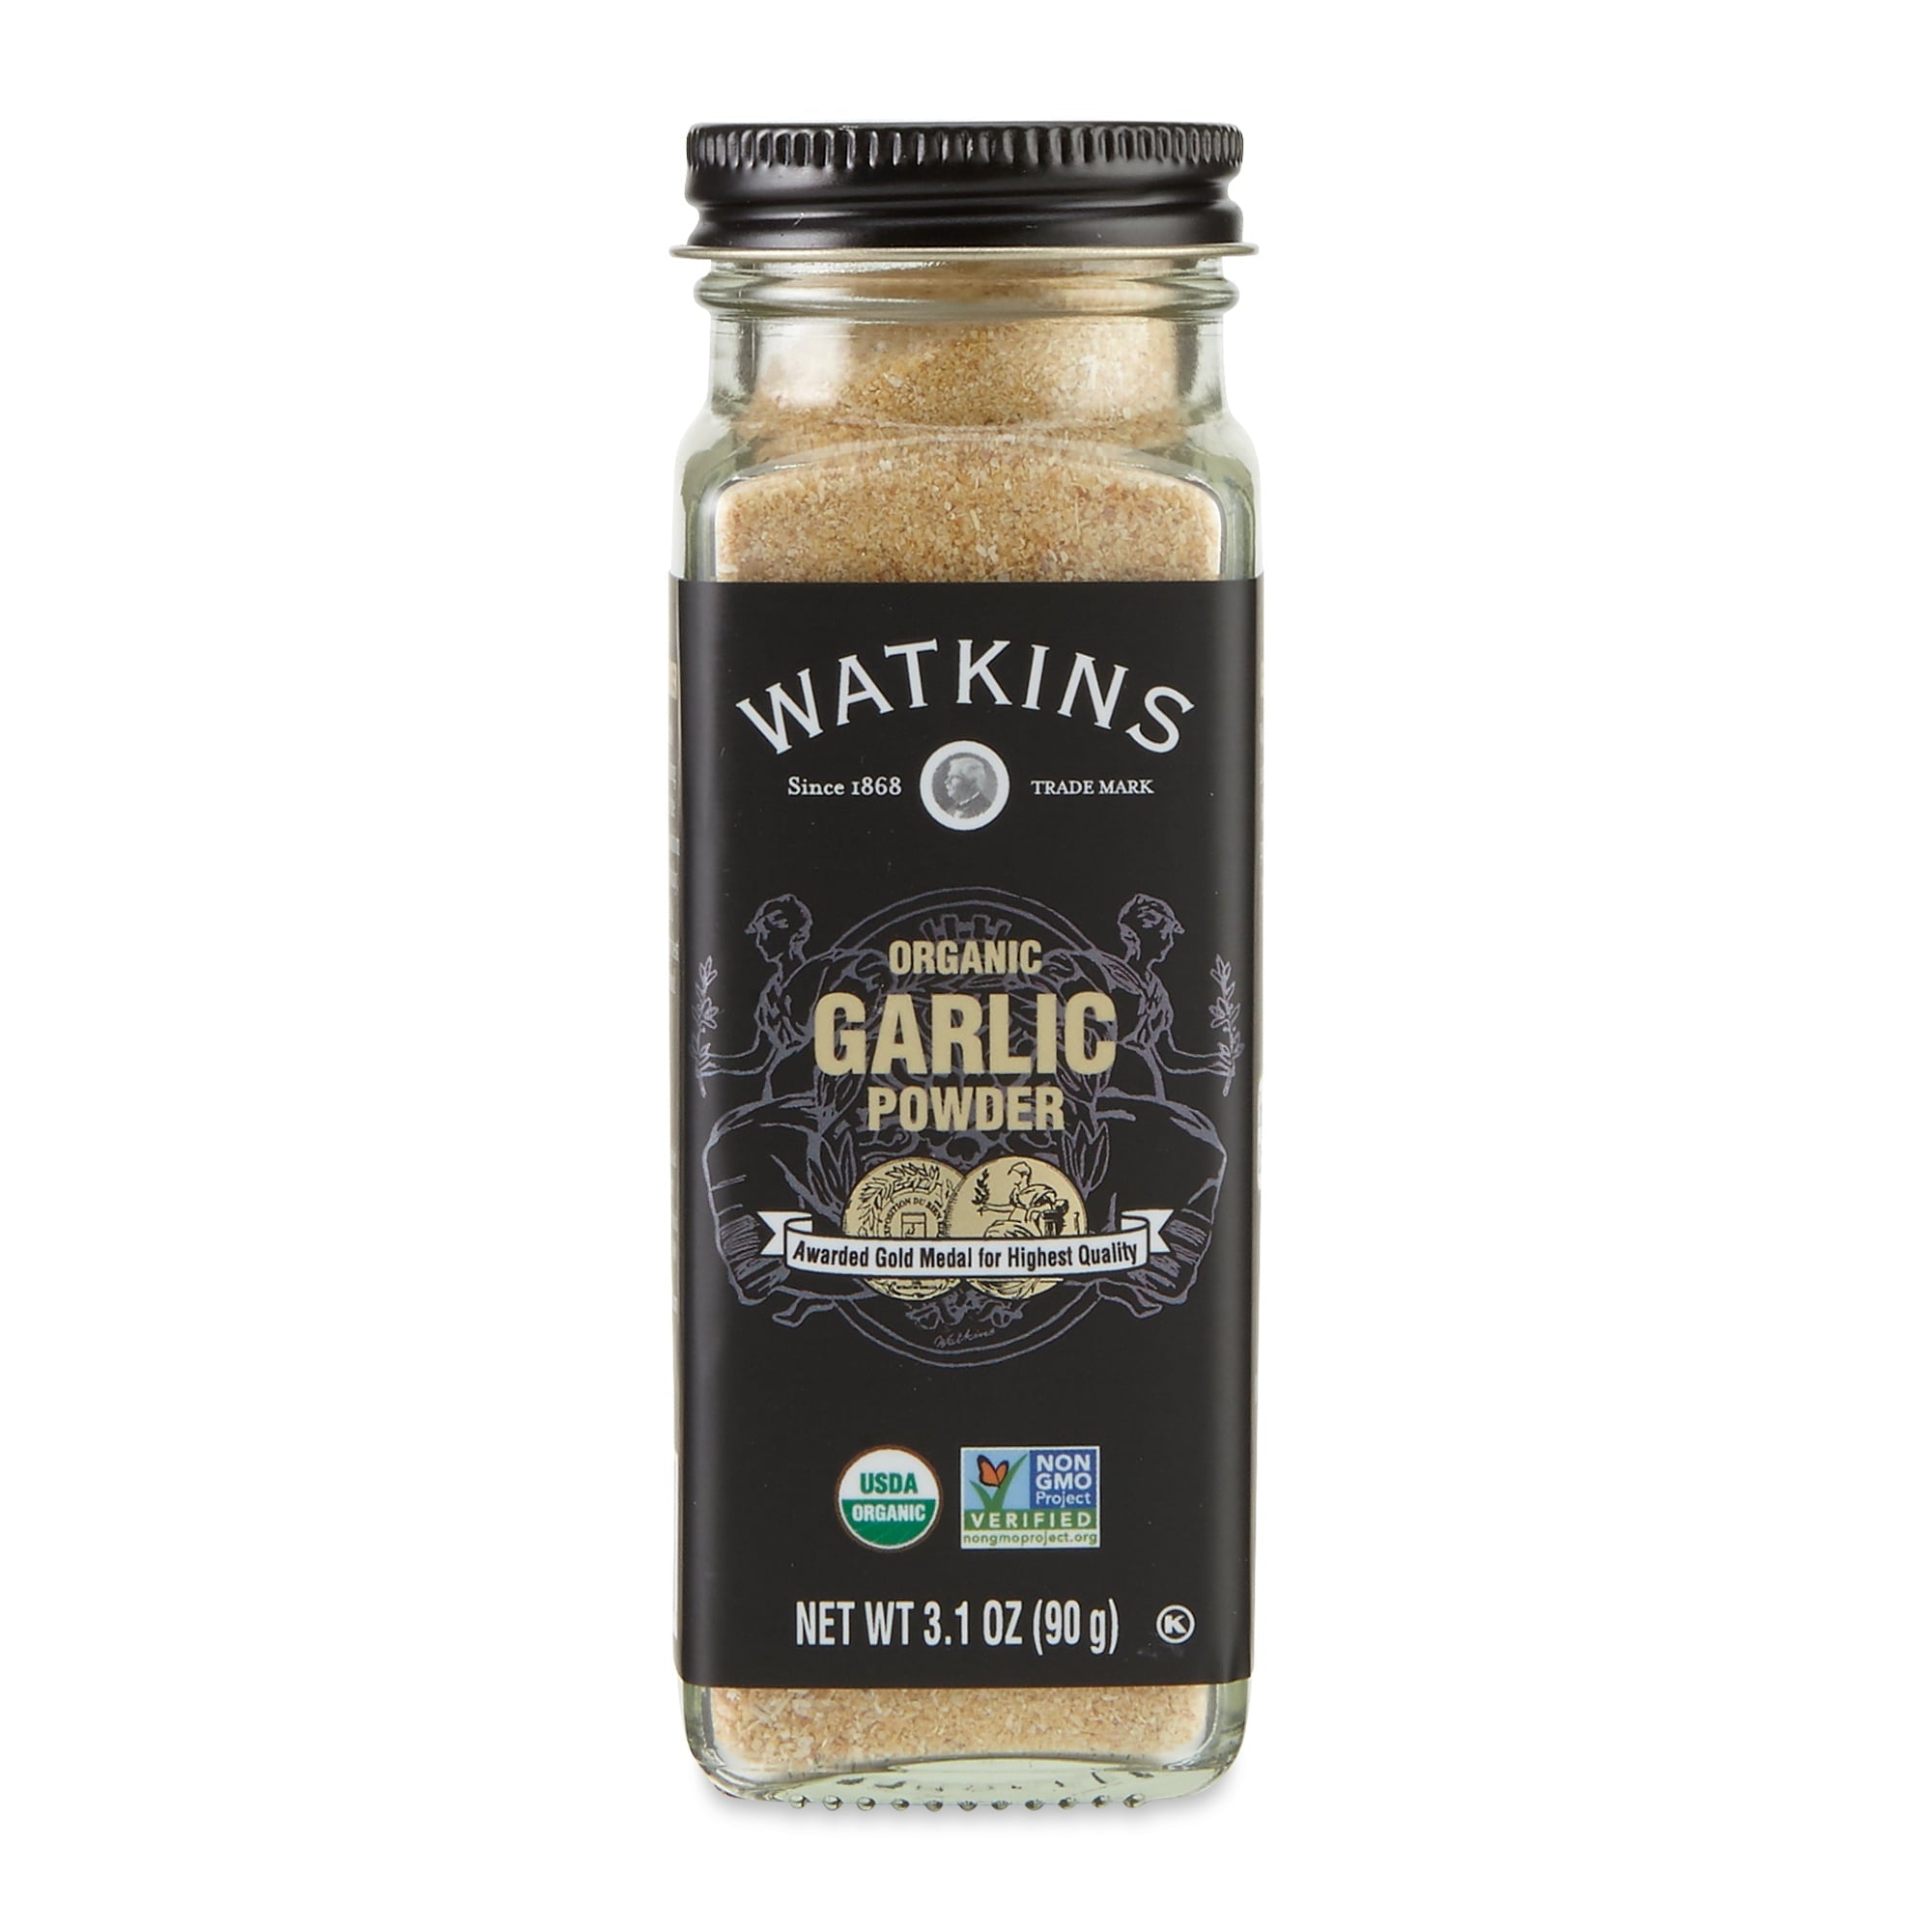 Watkins Organic Garlic Powder 3.1 Oz